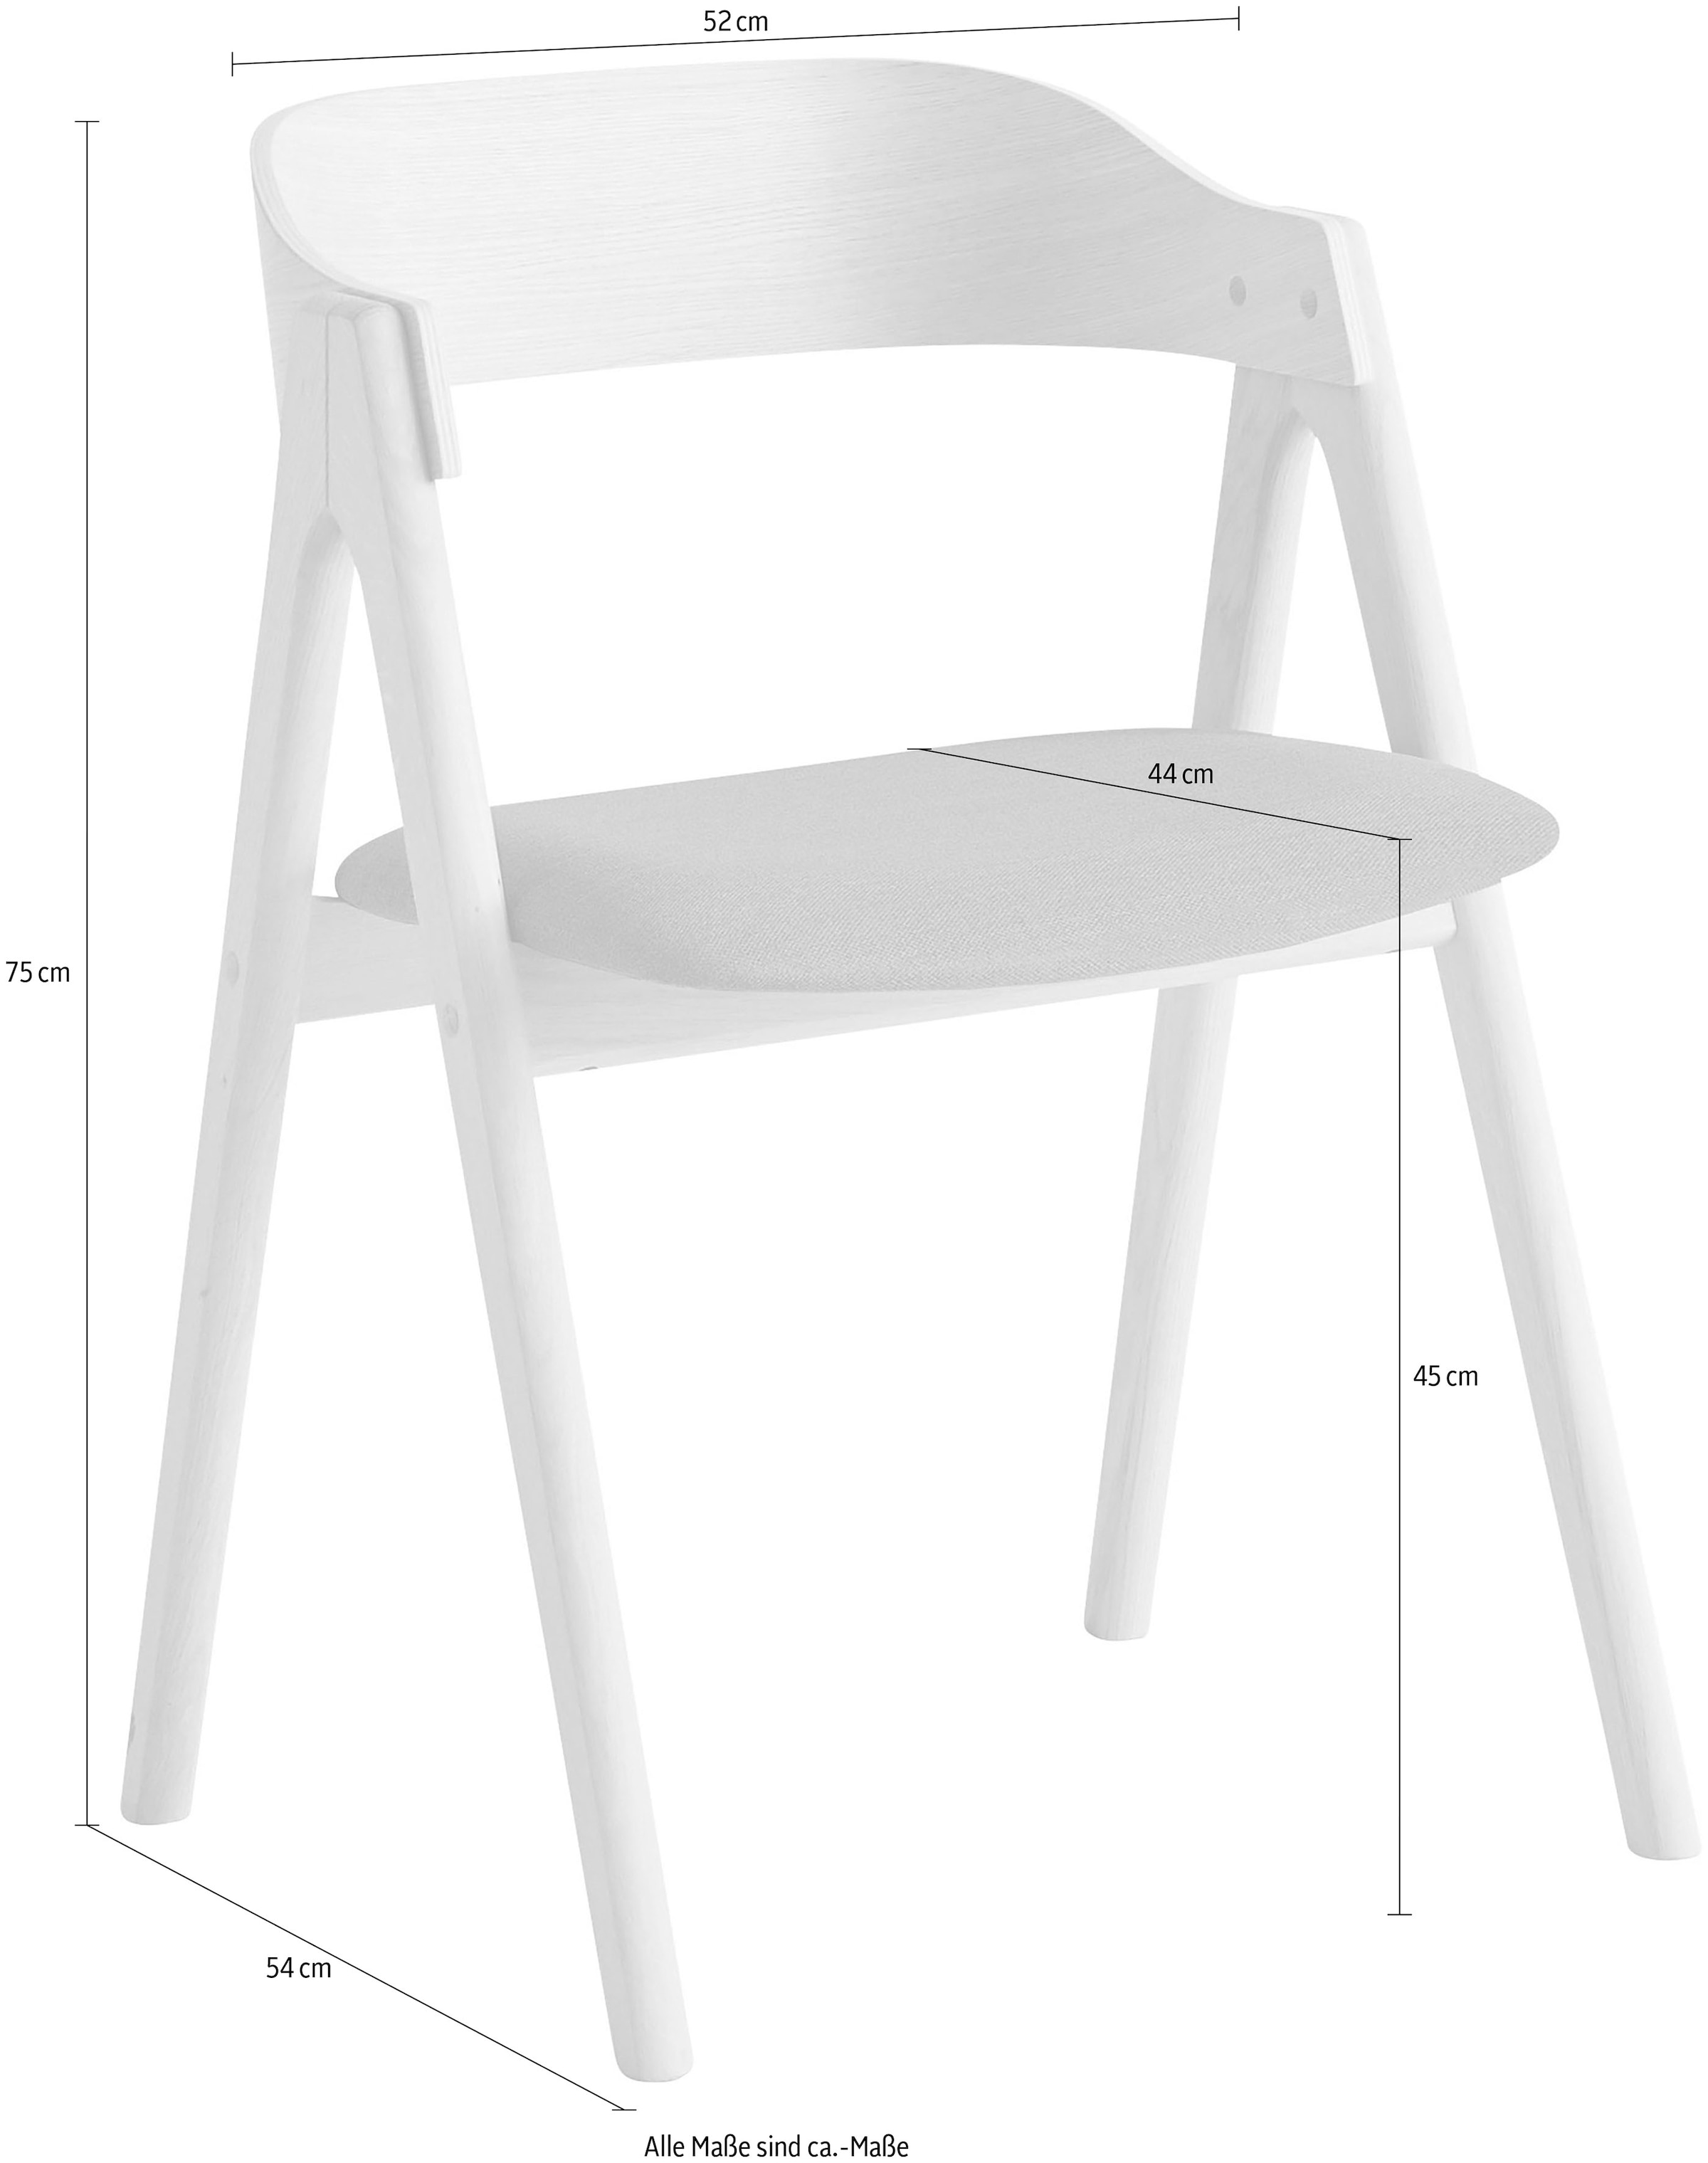 Hammel Furniture Holzstuhl »Findahl by Hammel Mette«, (Set), 2 St., Massivholz, gepolsterte Sitzfläche, versch. Farbvarianten